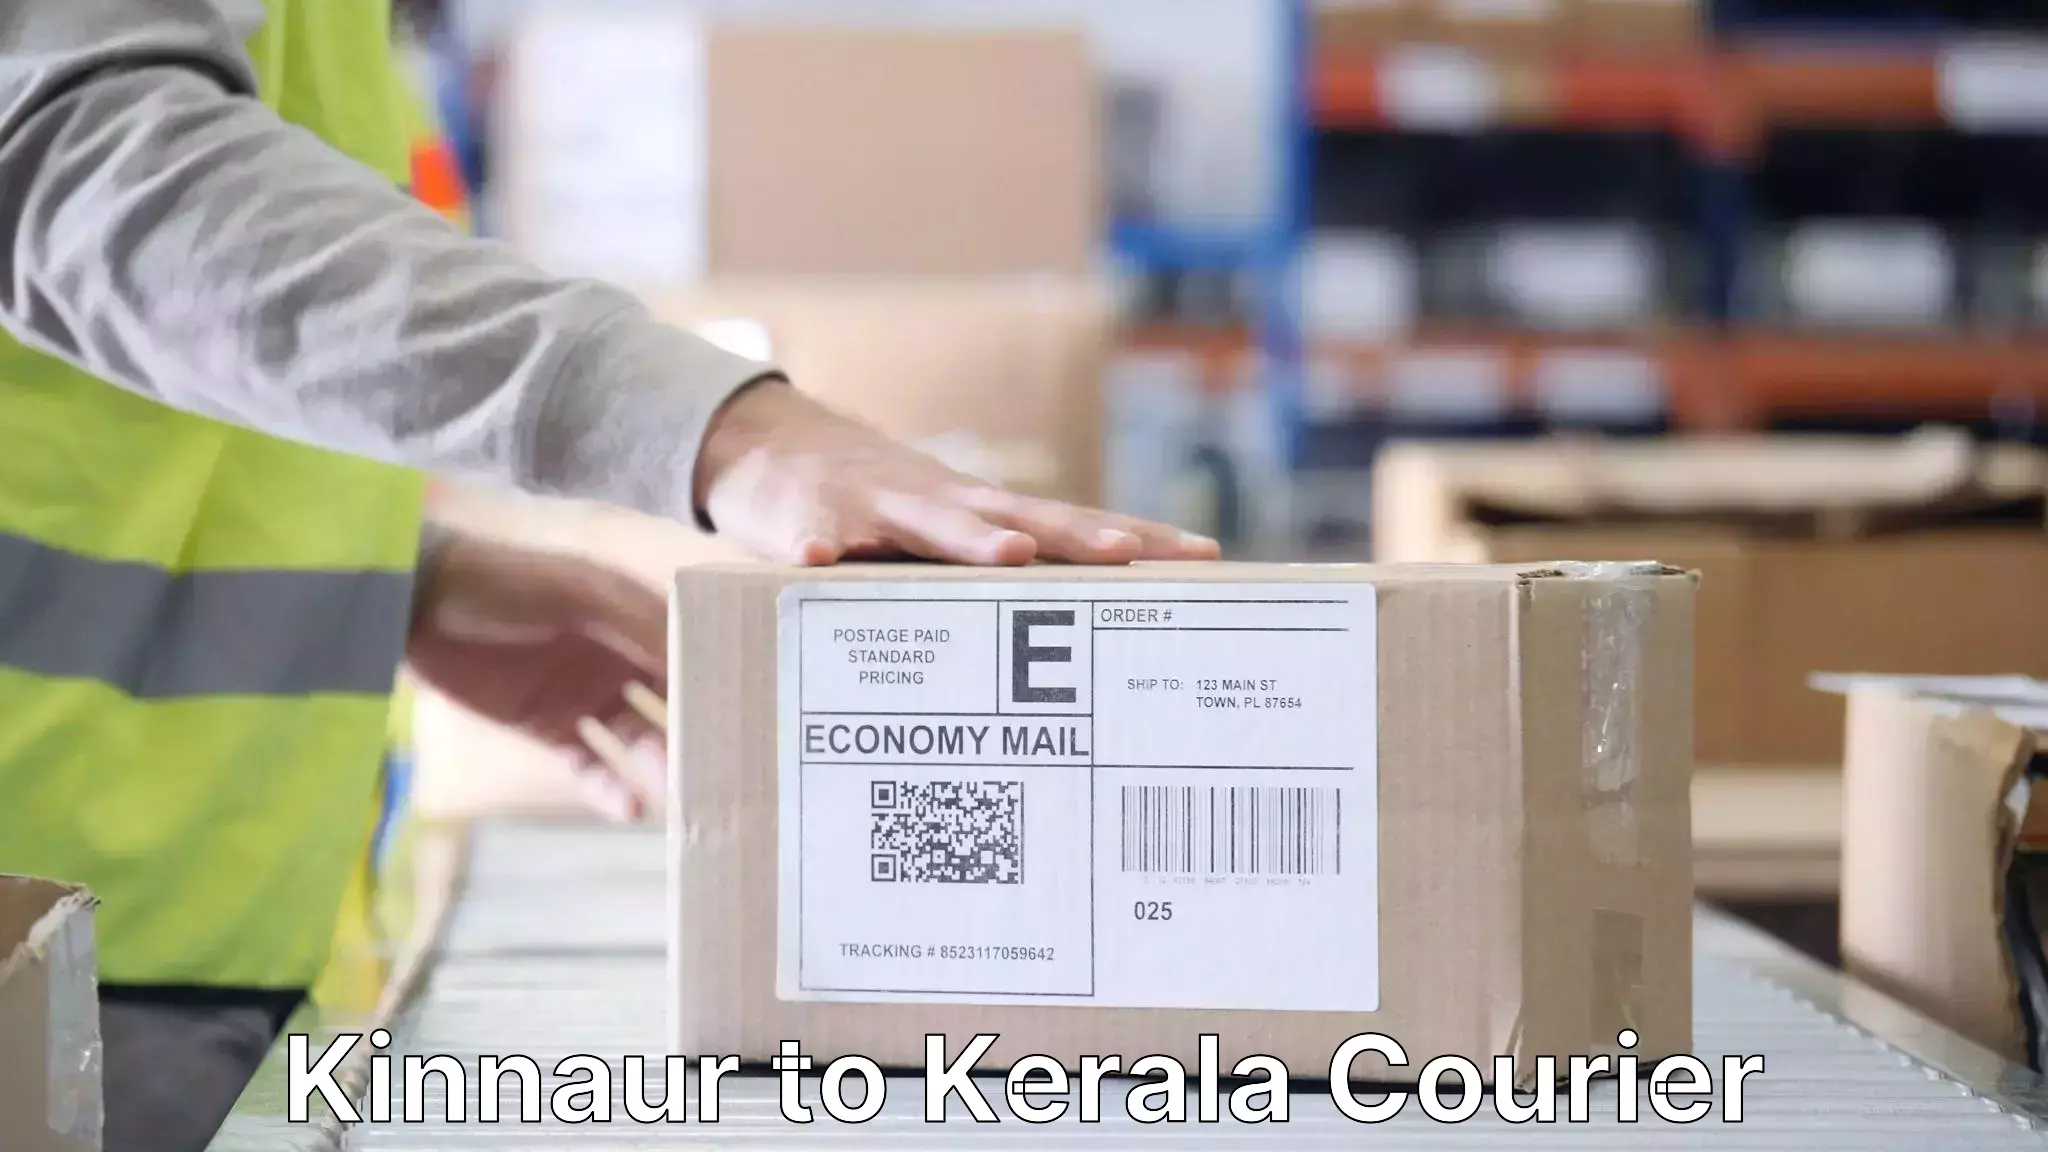 Furniture moving experts Kinnaur to Kerala